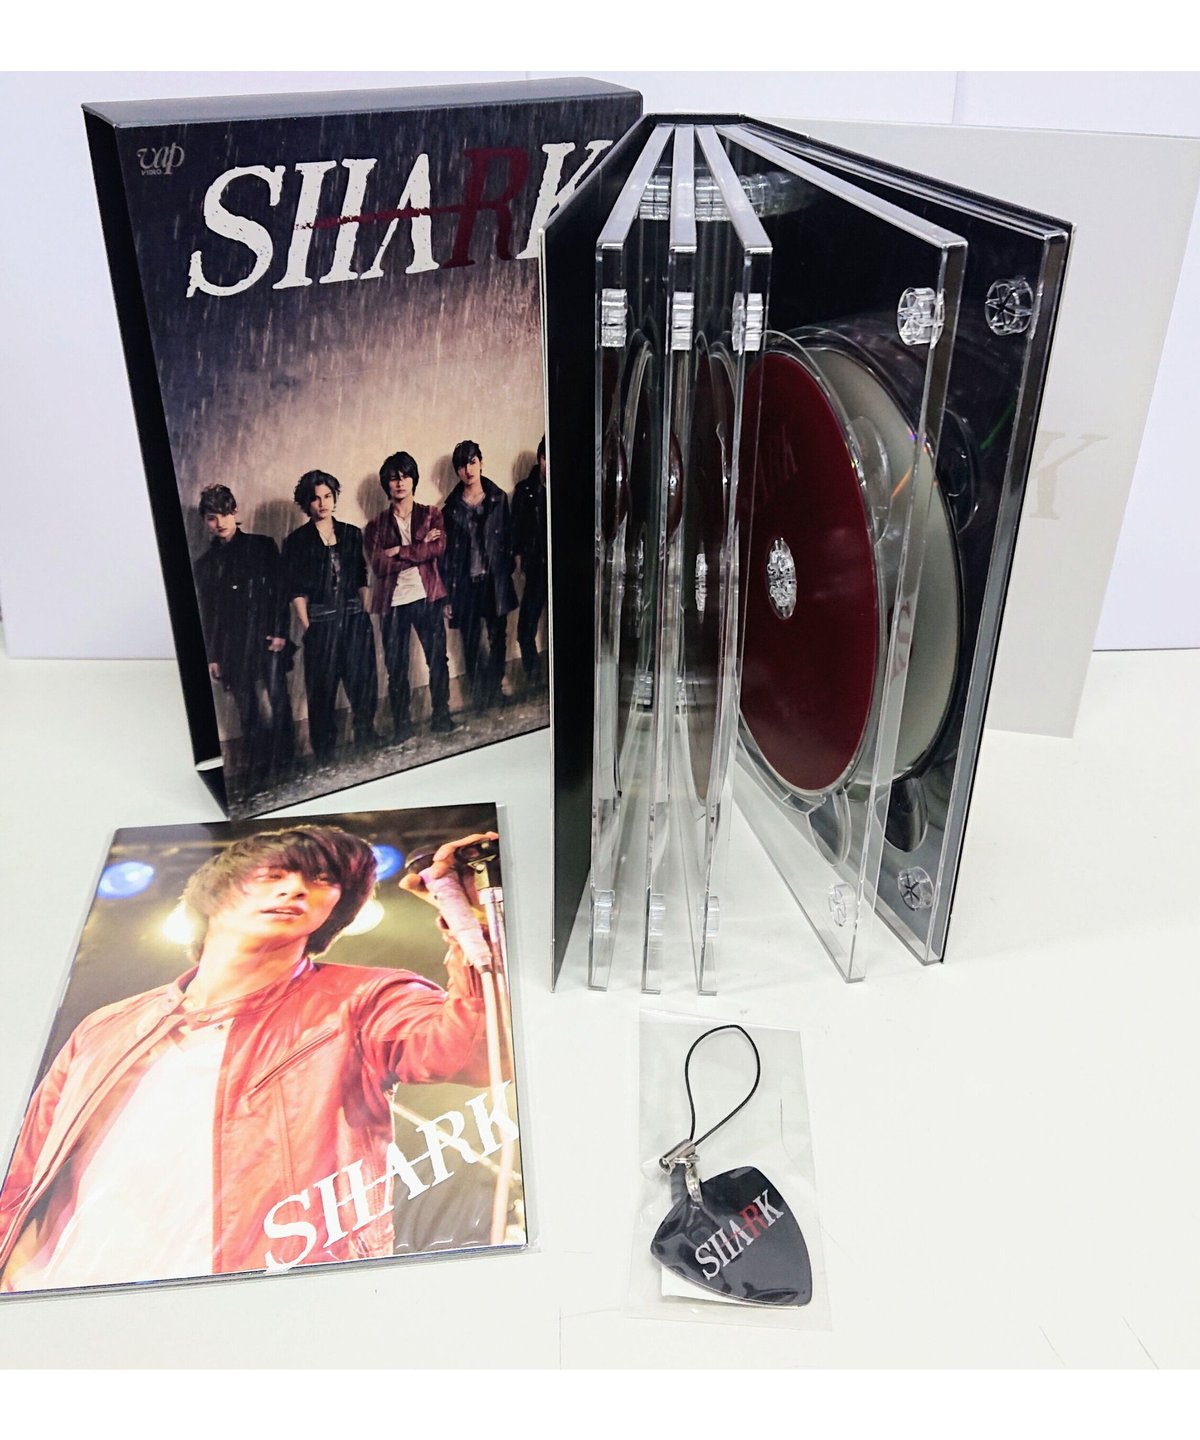 美品 SHARK シャーク DVD-BOX 豪華版〈初回限定生産・5枚組〉付属〇山下リオ